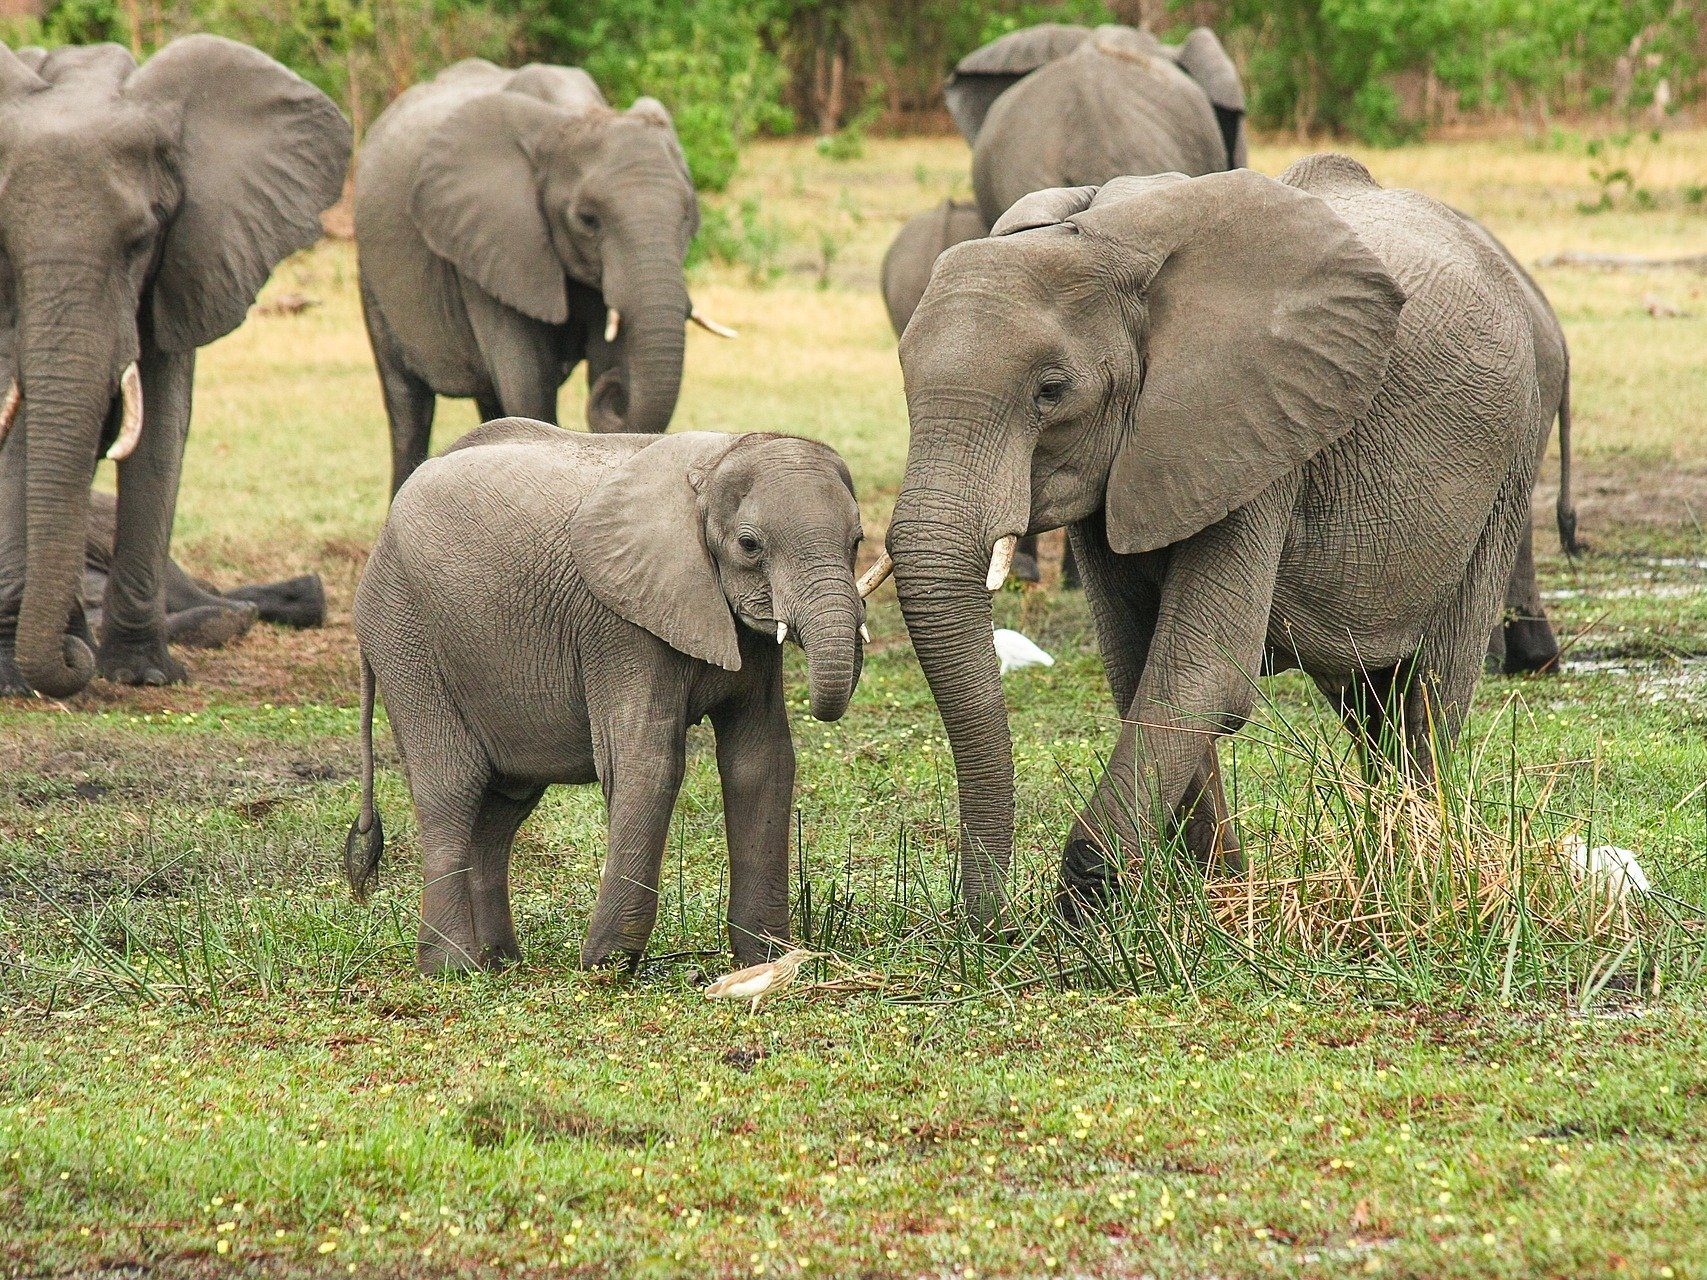 African elephants face many threats, including poachers and habitat loss.